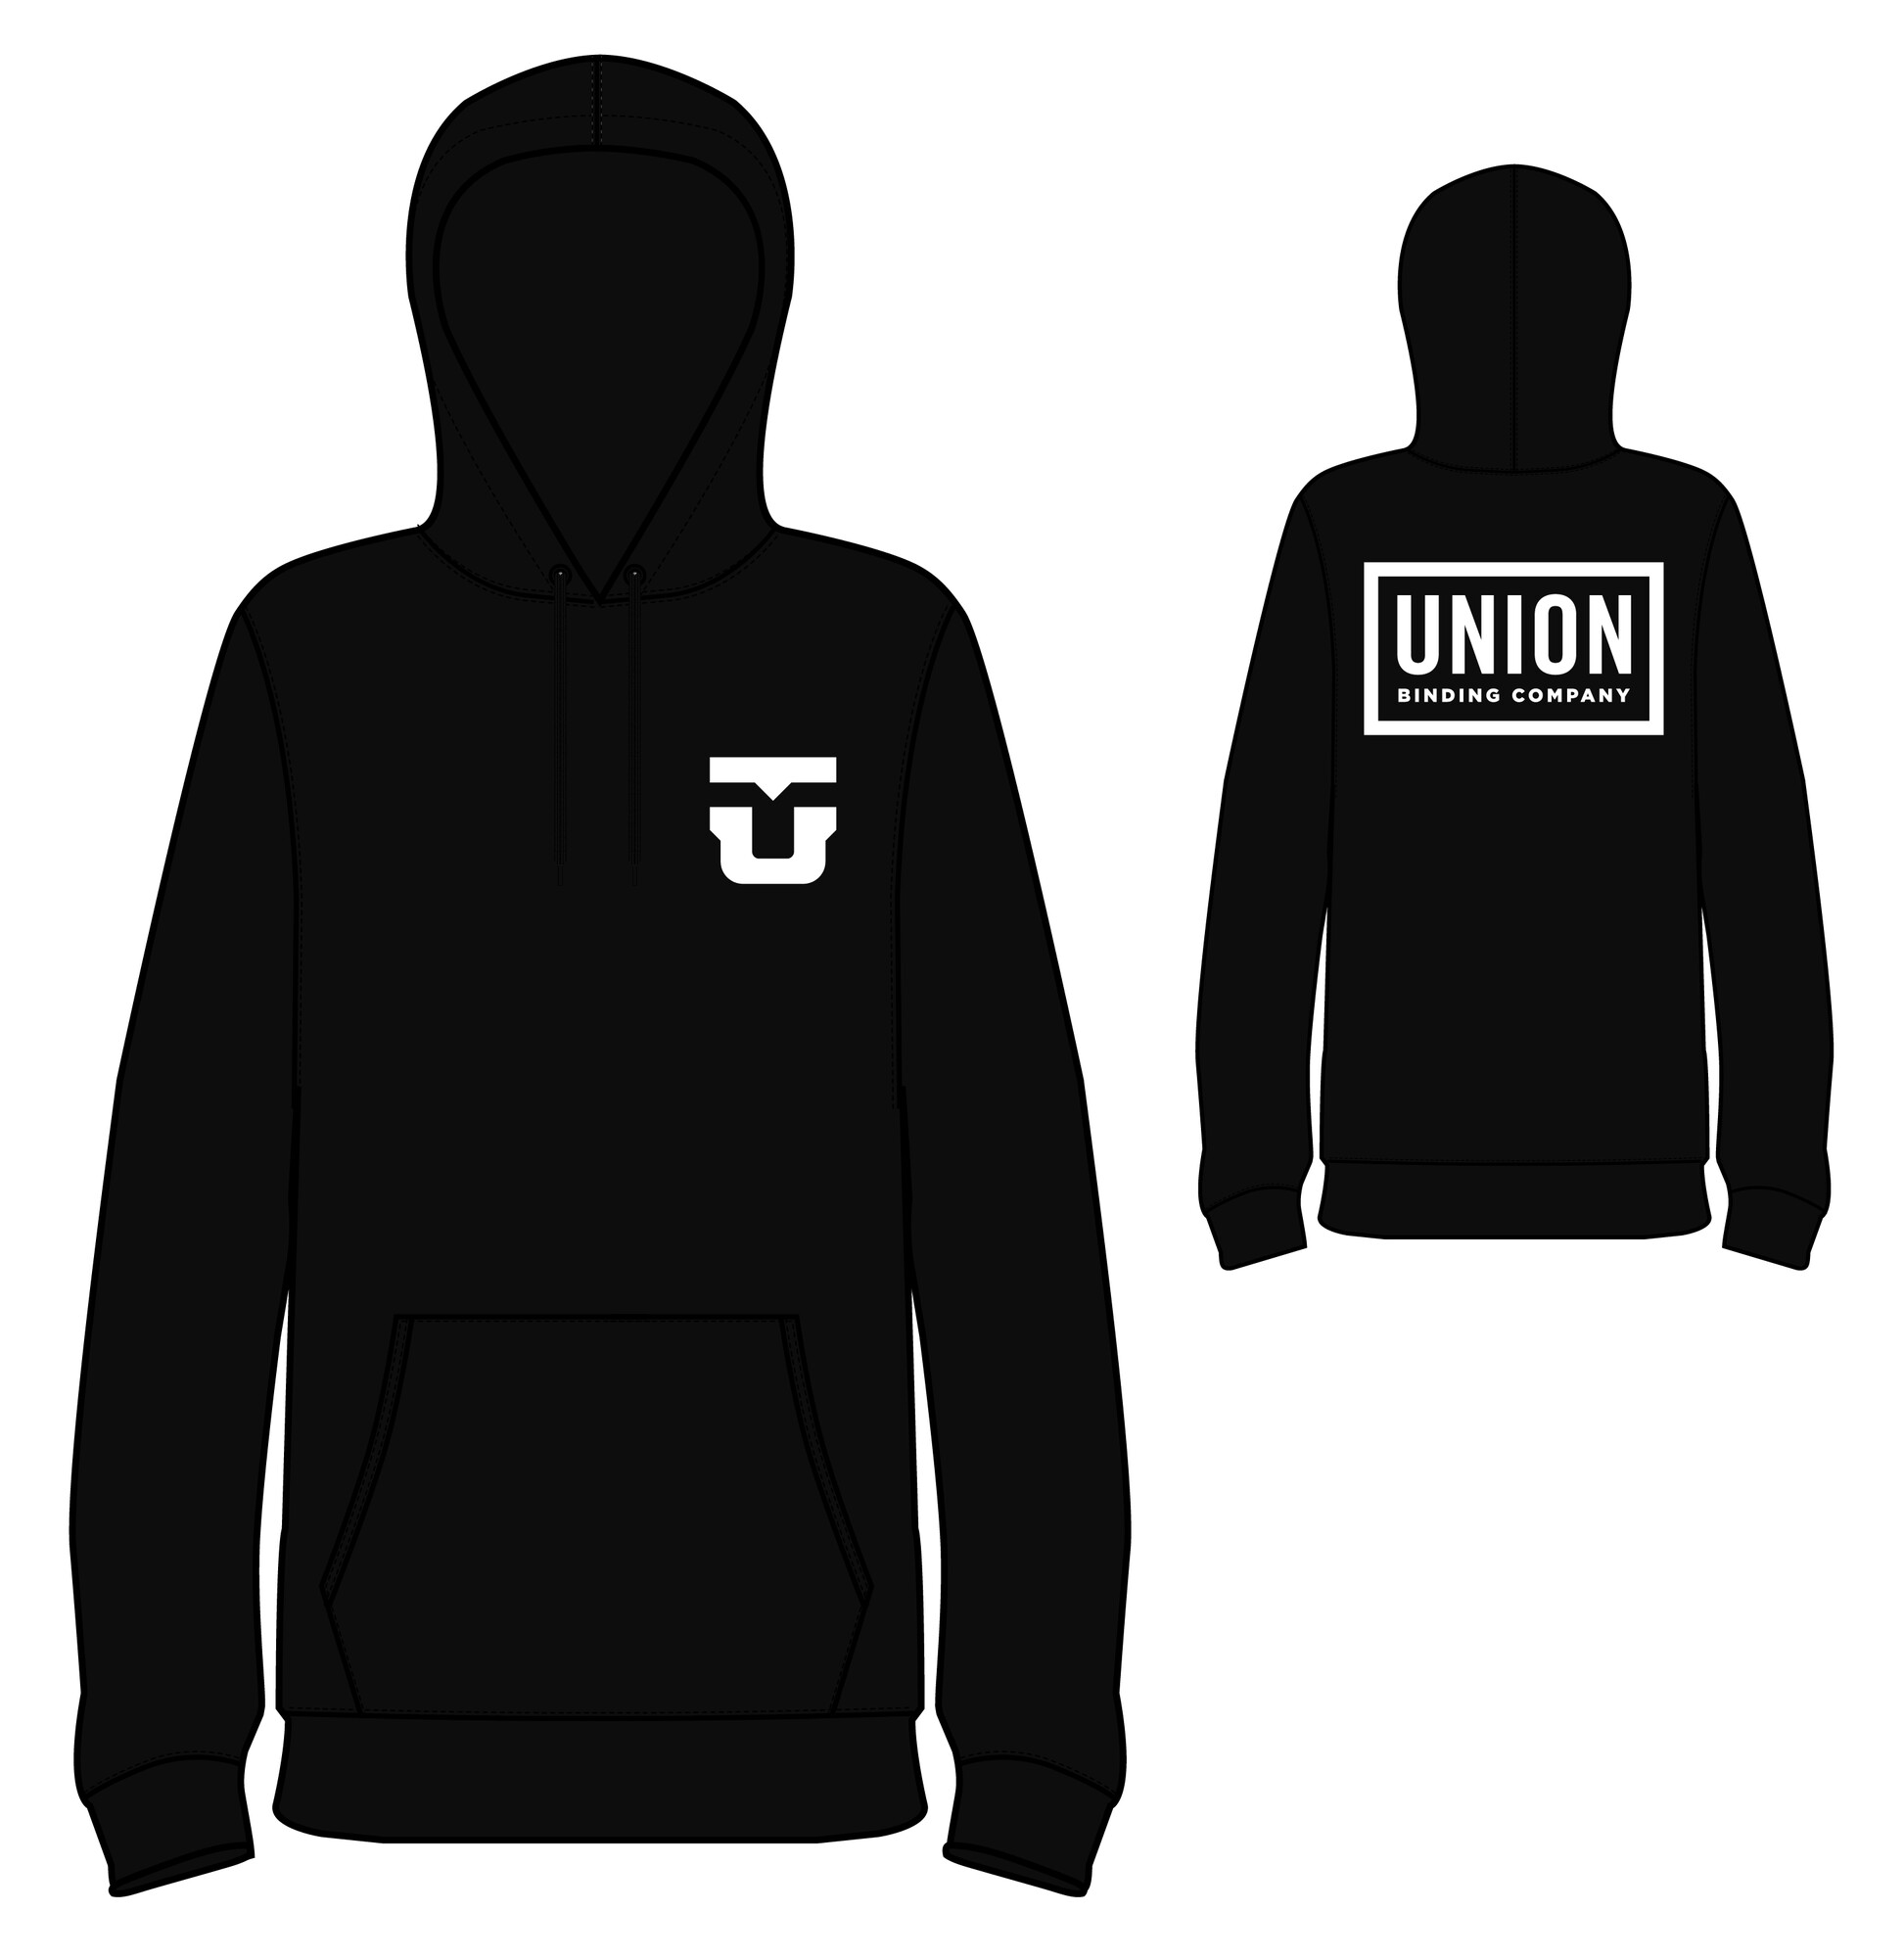 Union Team Hoodie black back logo